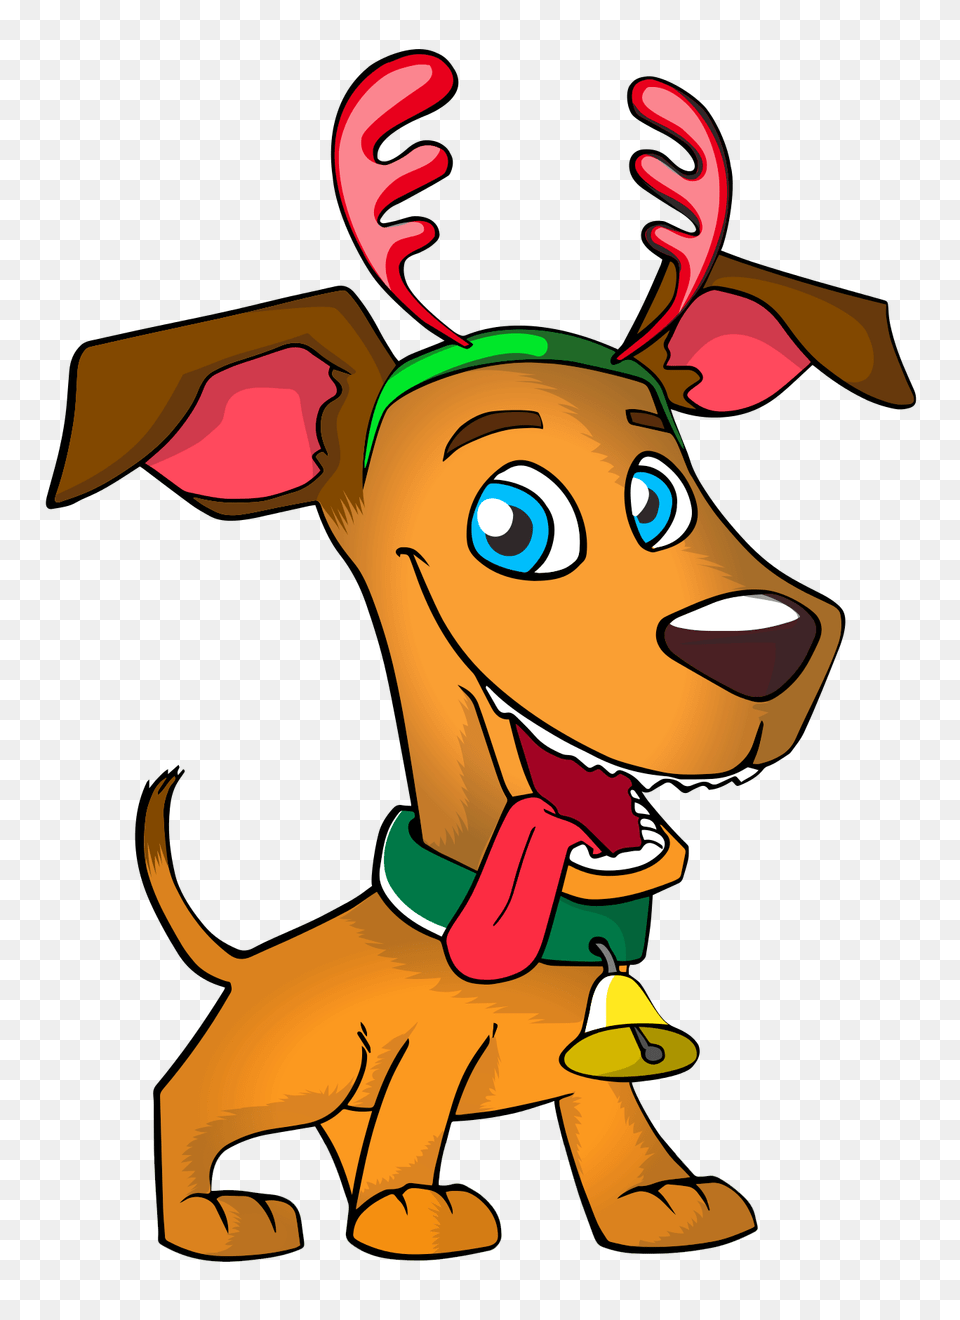 Pngpix Com Dog Vector Image, Baby, Person, Animal, Deer Png